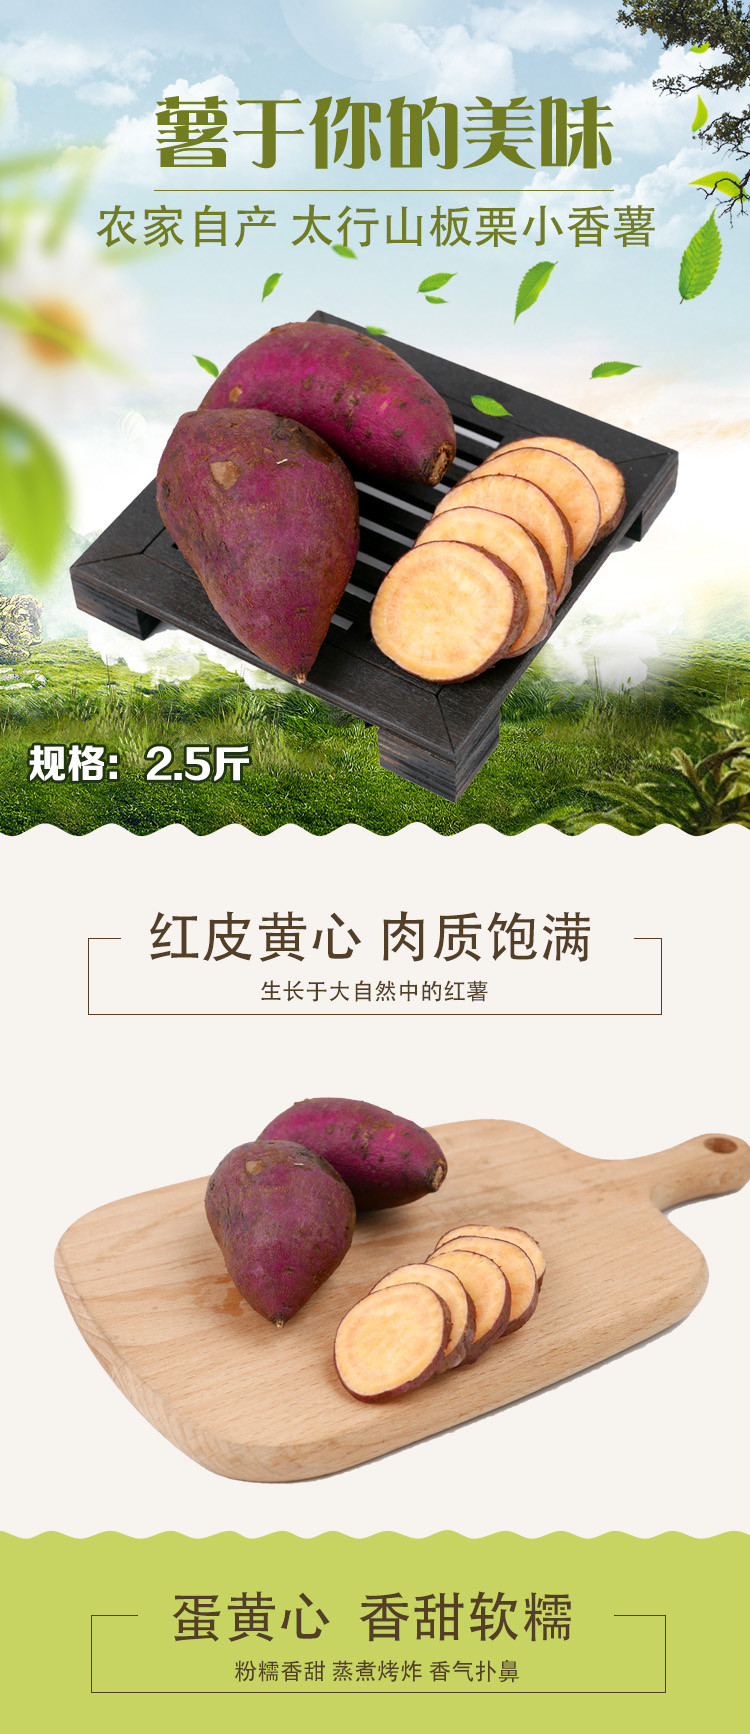 DL农家自产 太行山板栗小香薯2.5斤 小红薯新鲜现挖板栗番薯迷你地瓜